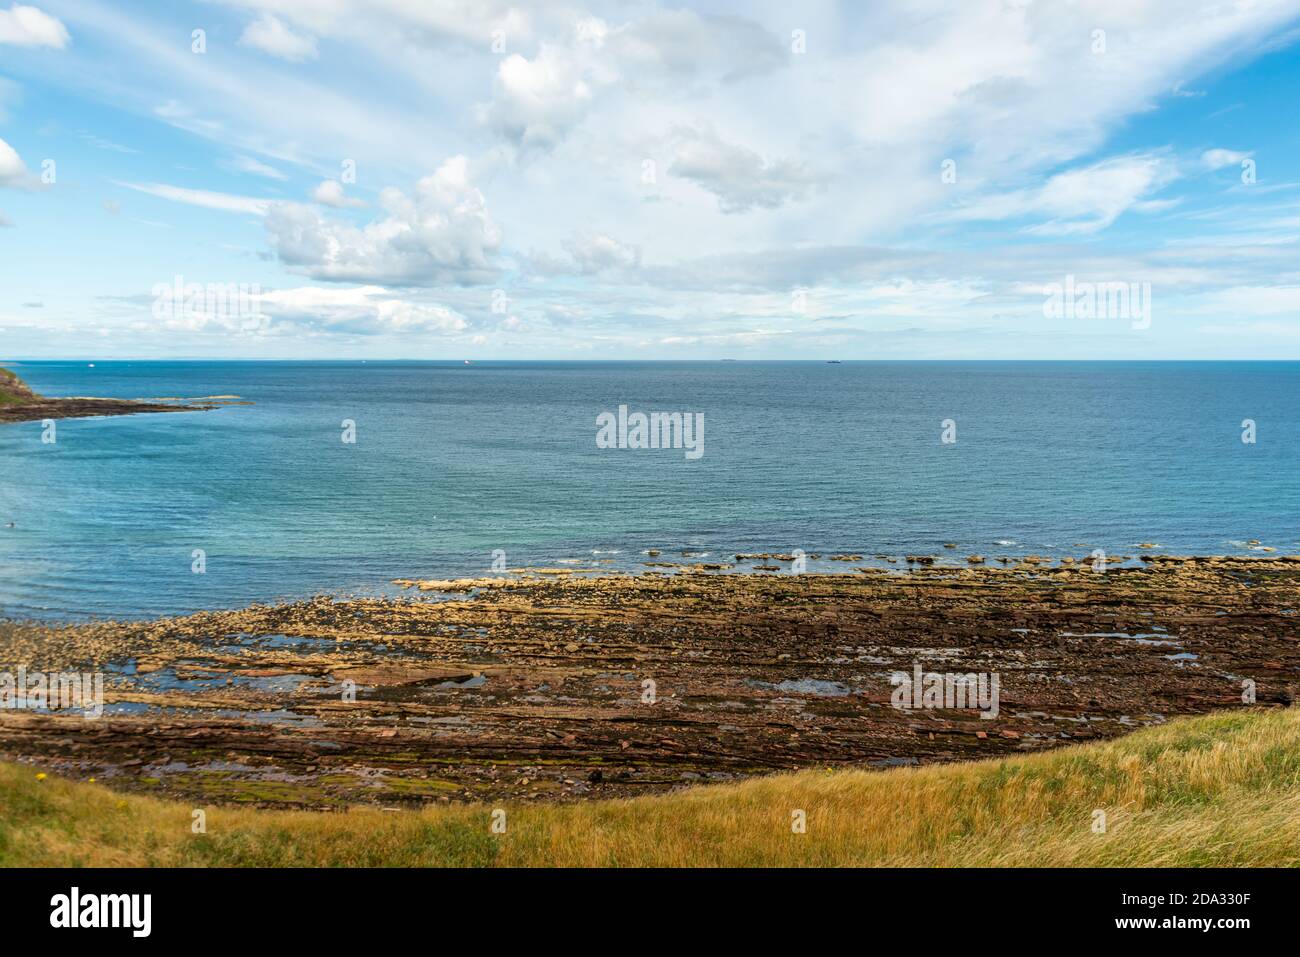 St Abbs, United Kingdom - August 03, 2020: Coastline near St Abbs Head, Berwickshire, Scottish Borders, Scotland. Berwickshire Coastal Path hike Stock Photo